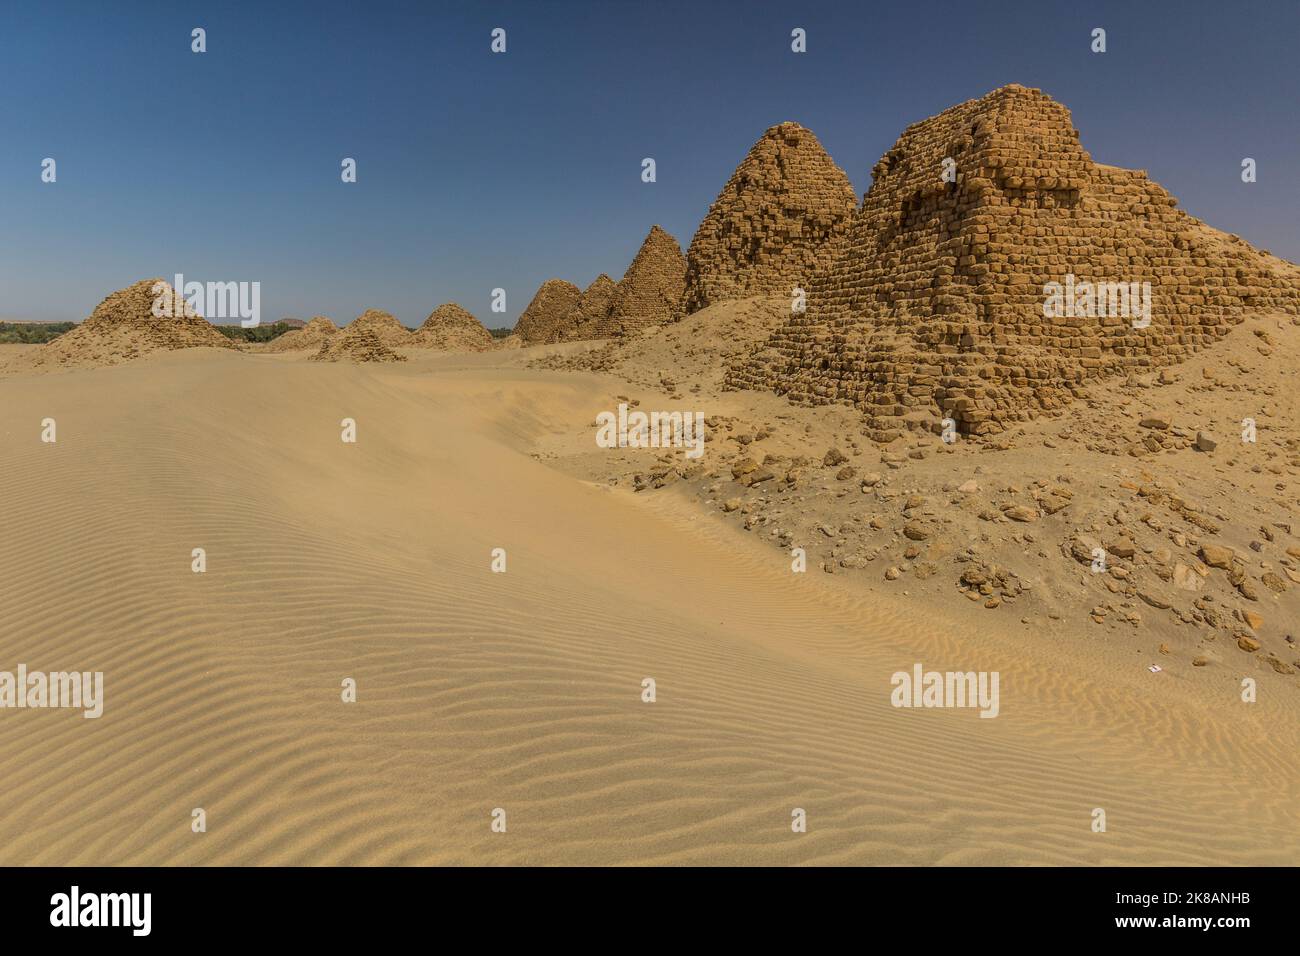 Nuri pyramids in the desert near Karima town, Sudan Stock Photo